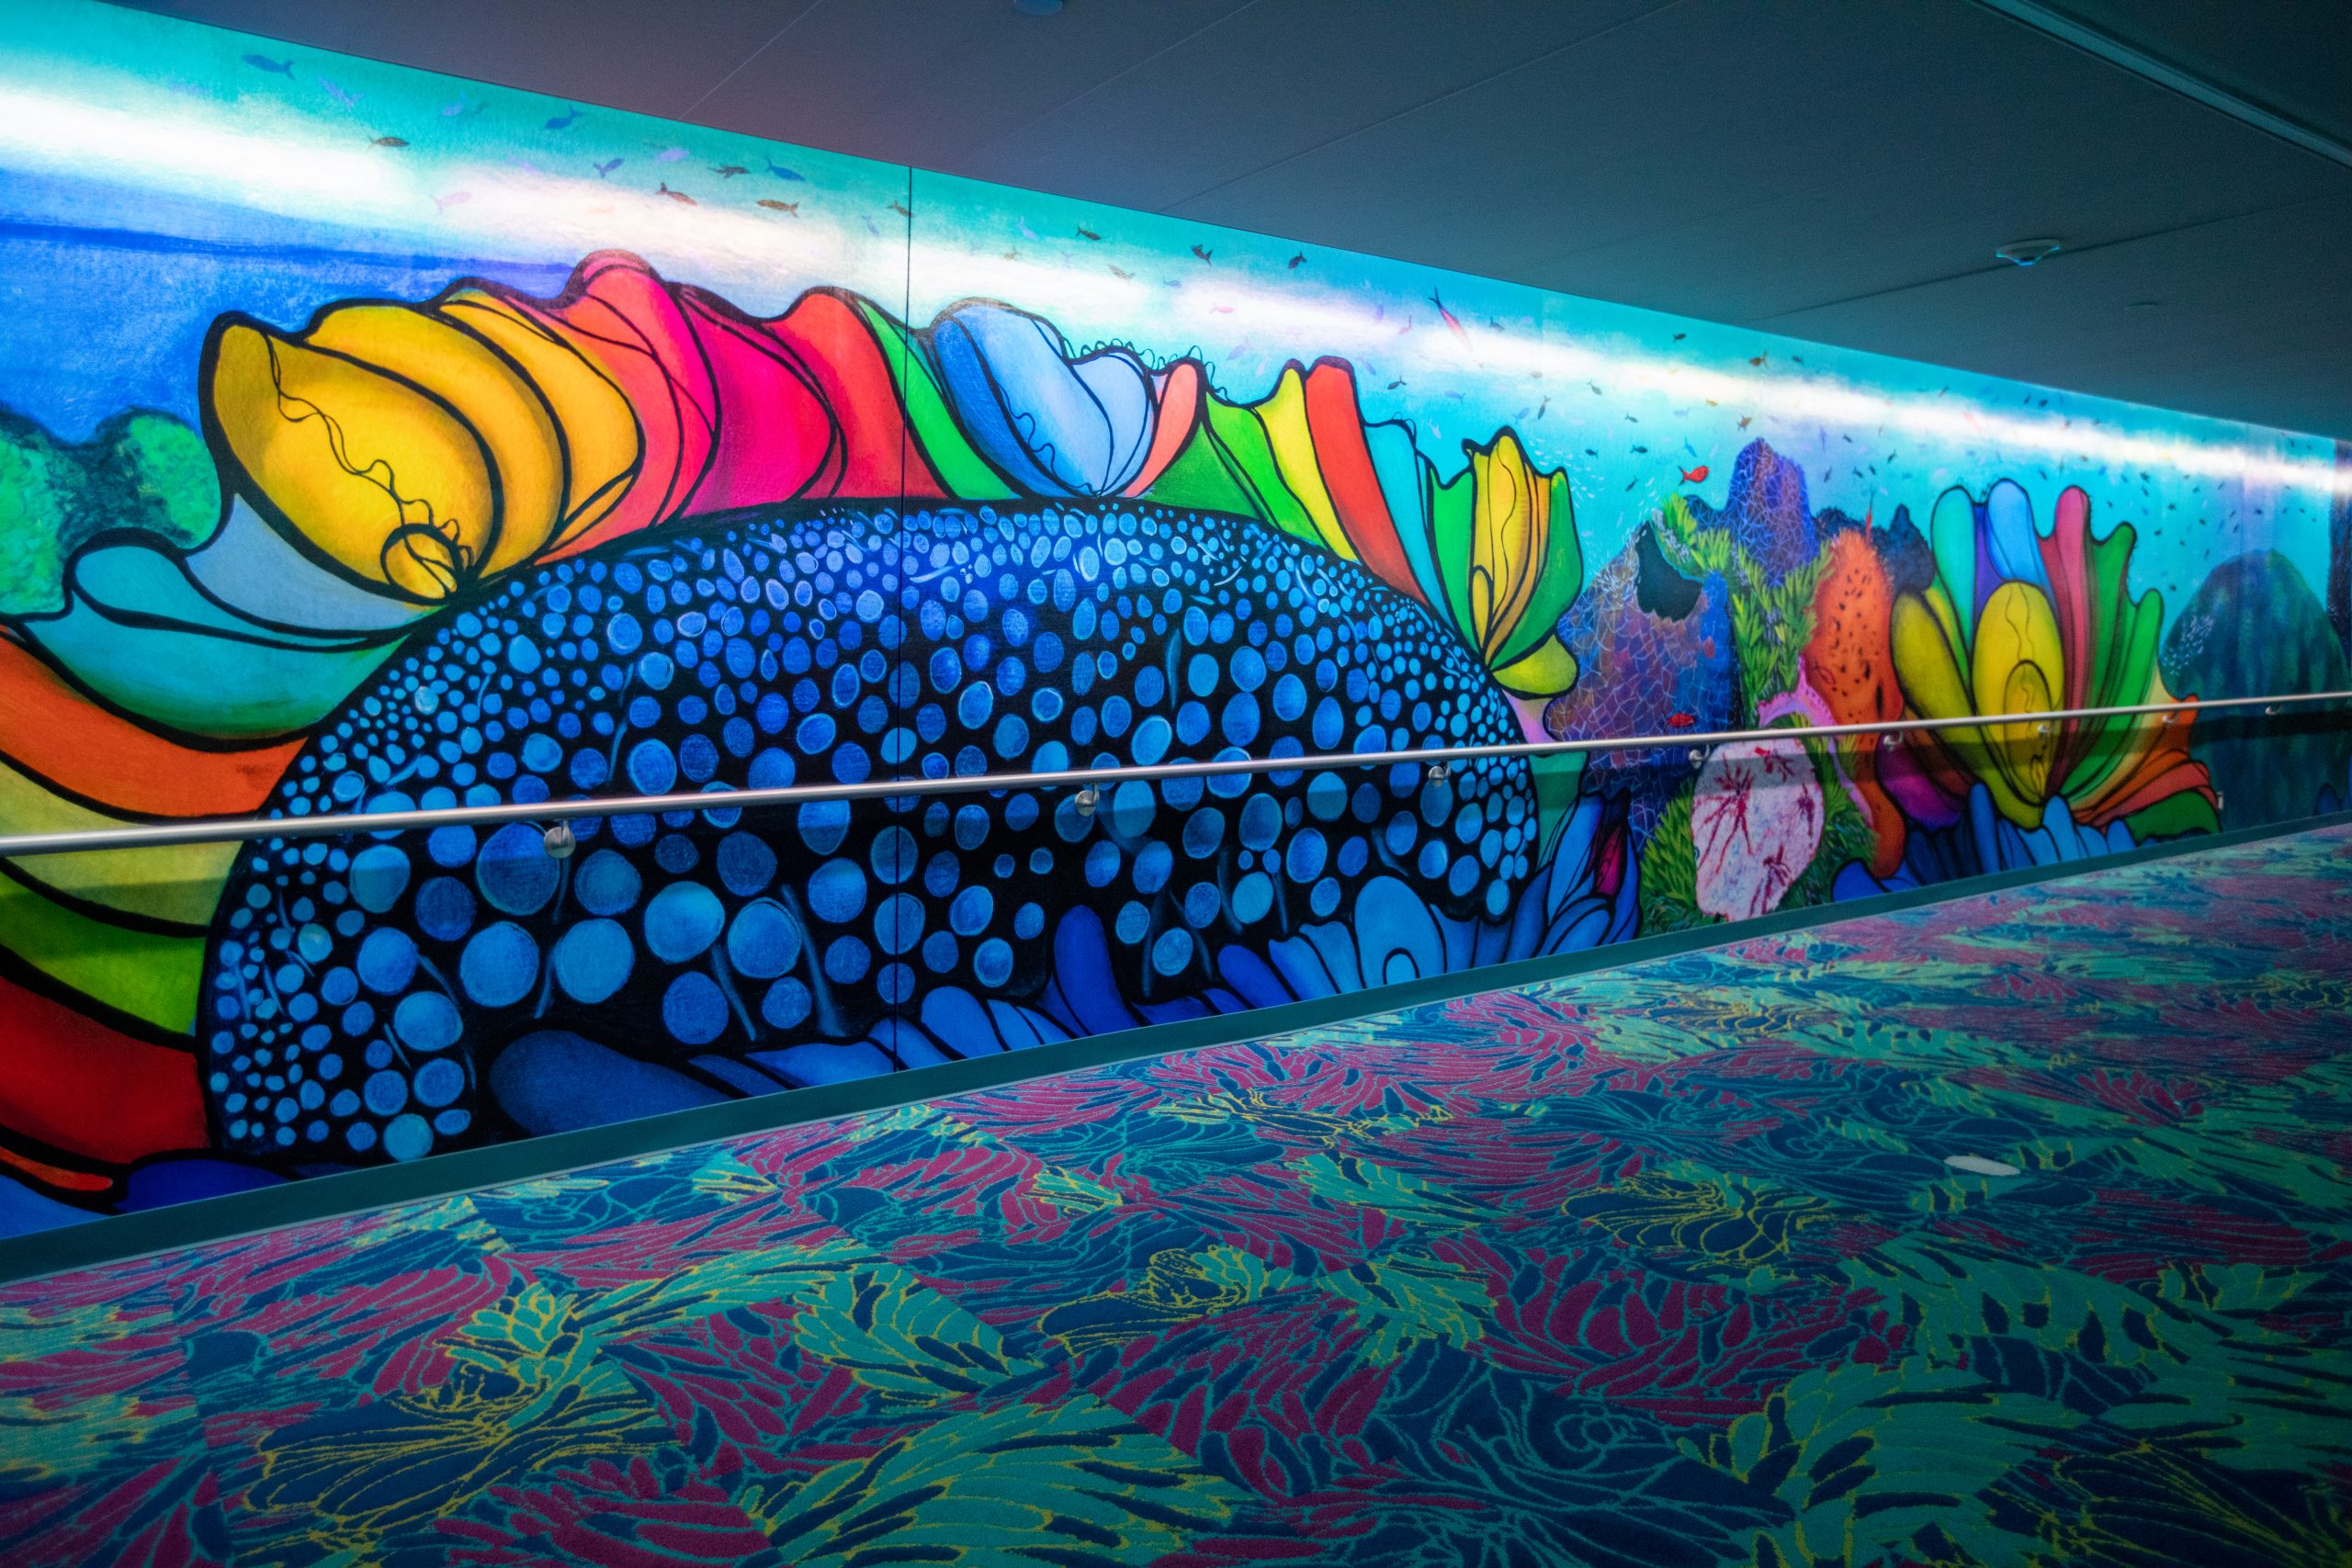 The Aquarius Art Tunnel by Janavi Mahimatura Folmsbee at George Bush Intercontinental Airport – Houston